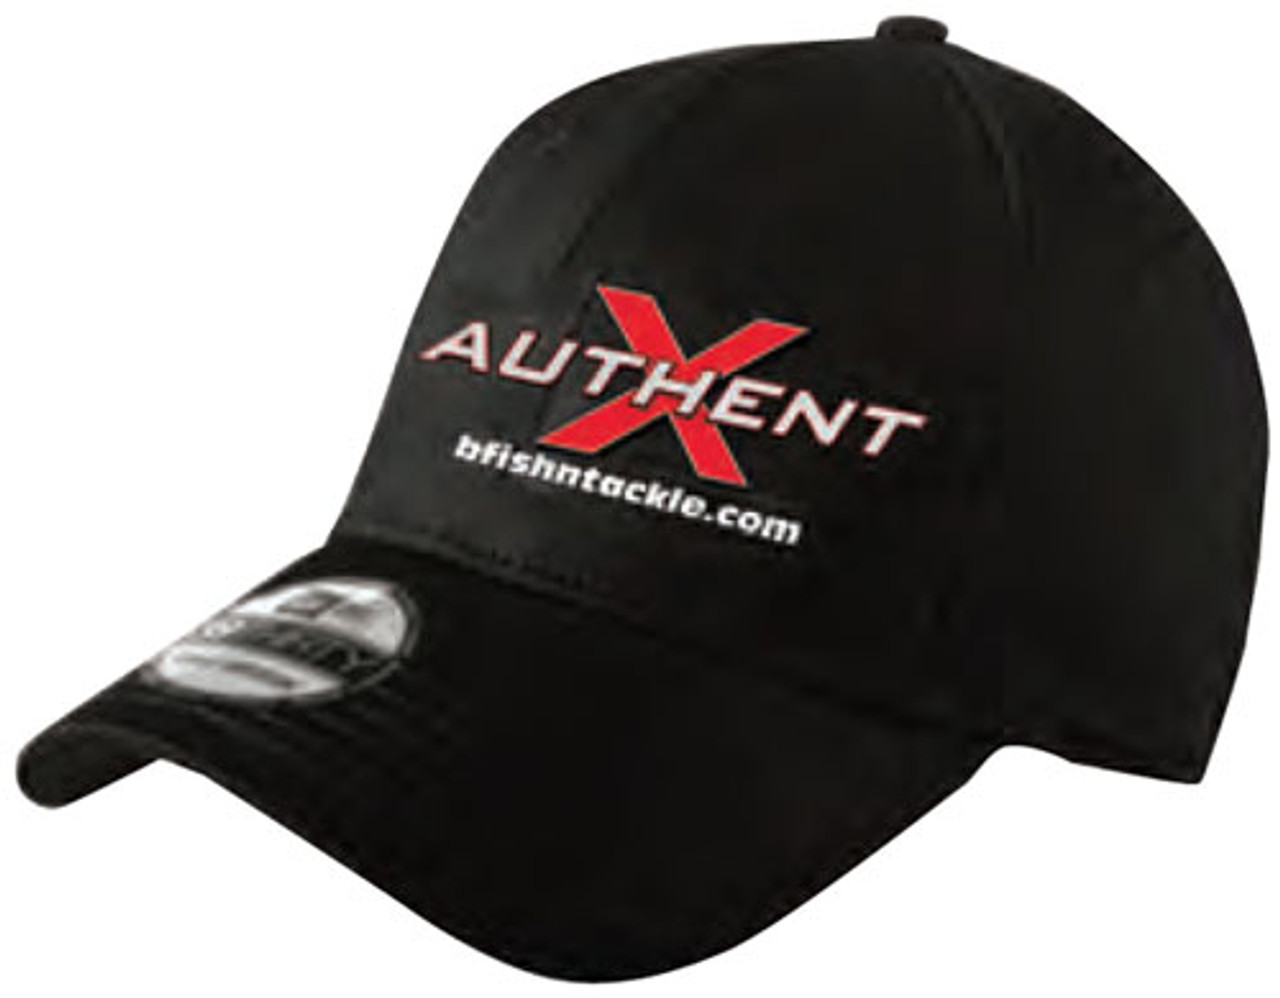 AuthentX Brand New Era Wool Structured Ball Cap